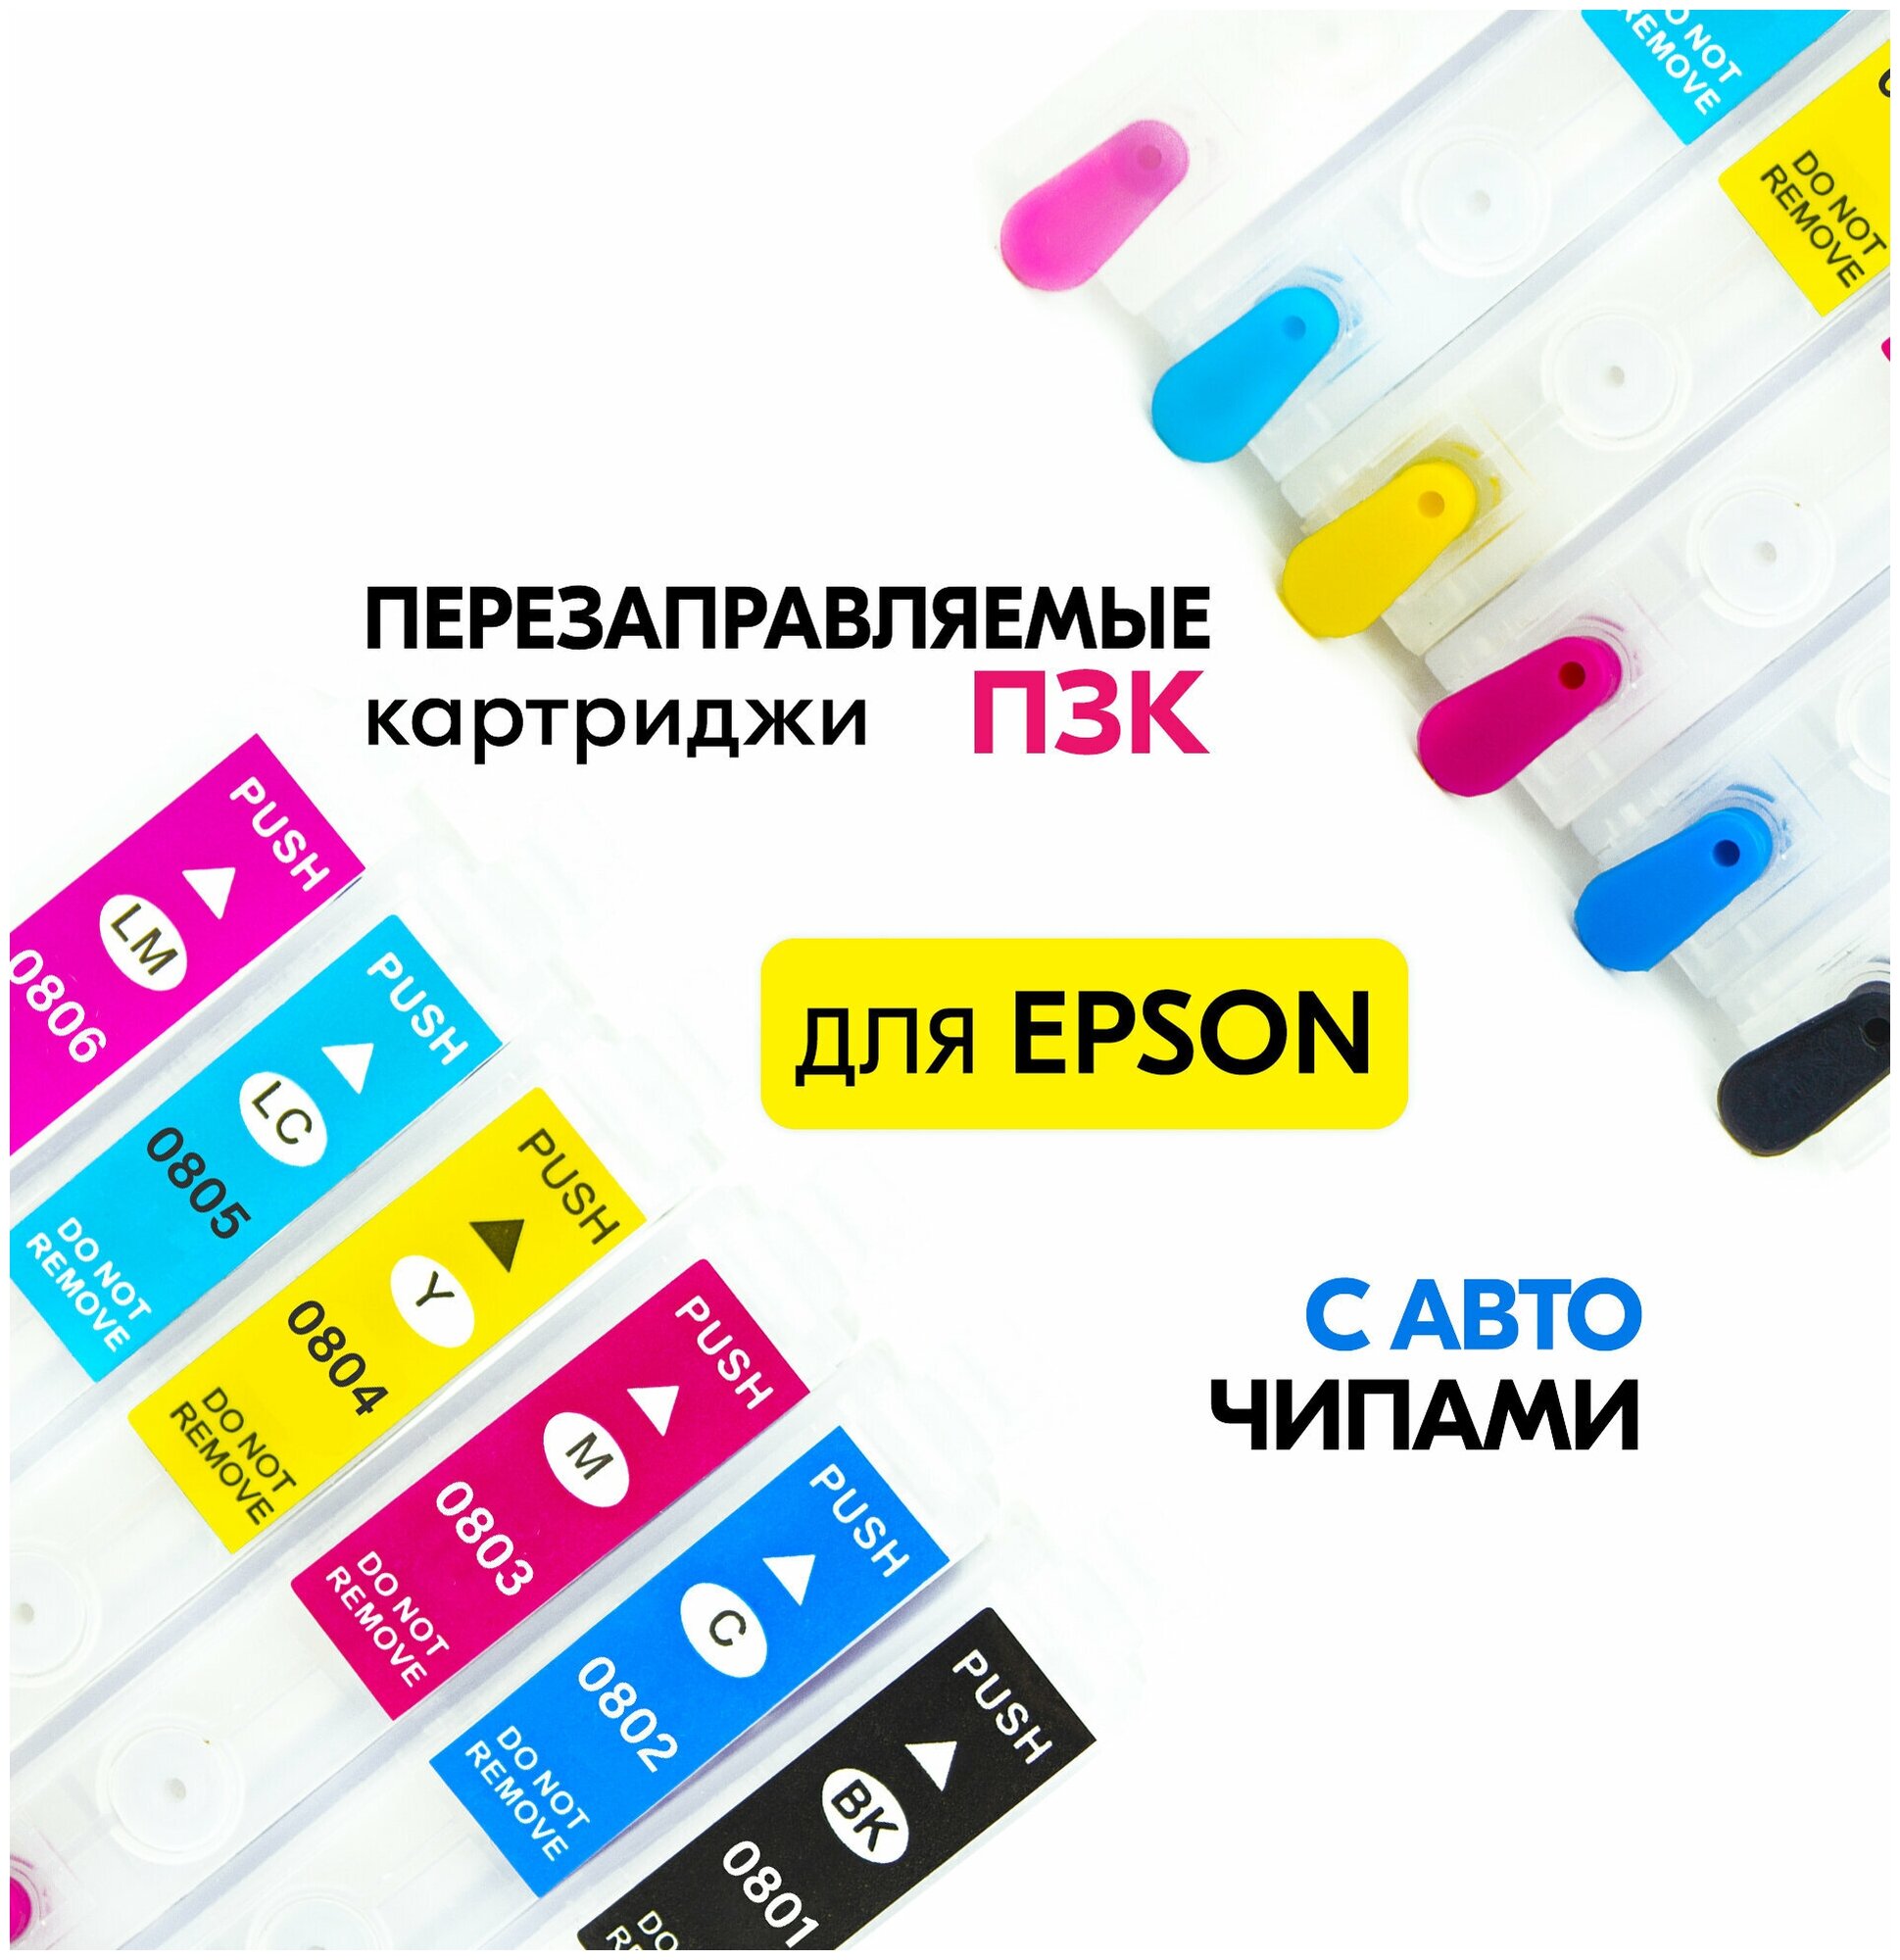 Перезаправляемые картриджи ПЗК T0801-T0806 для Epson Stylus Photo P50, R265, R285, R360, RX560, RX585 (без чернил) 6 цветов с авто-чипами, Inkmaster